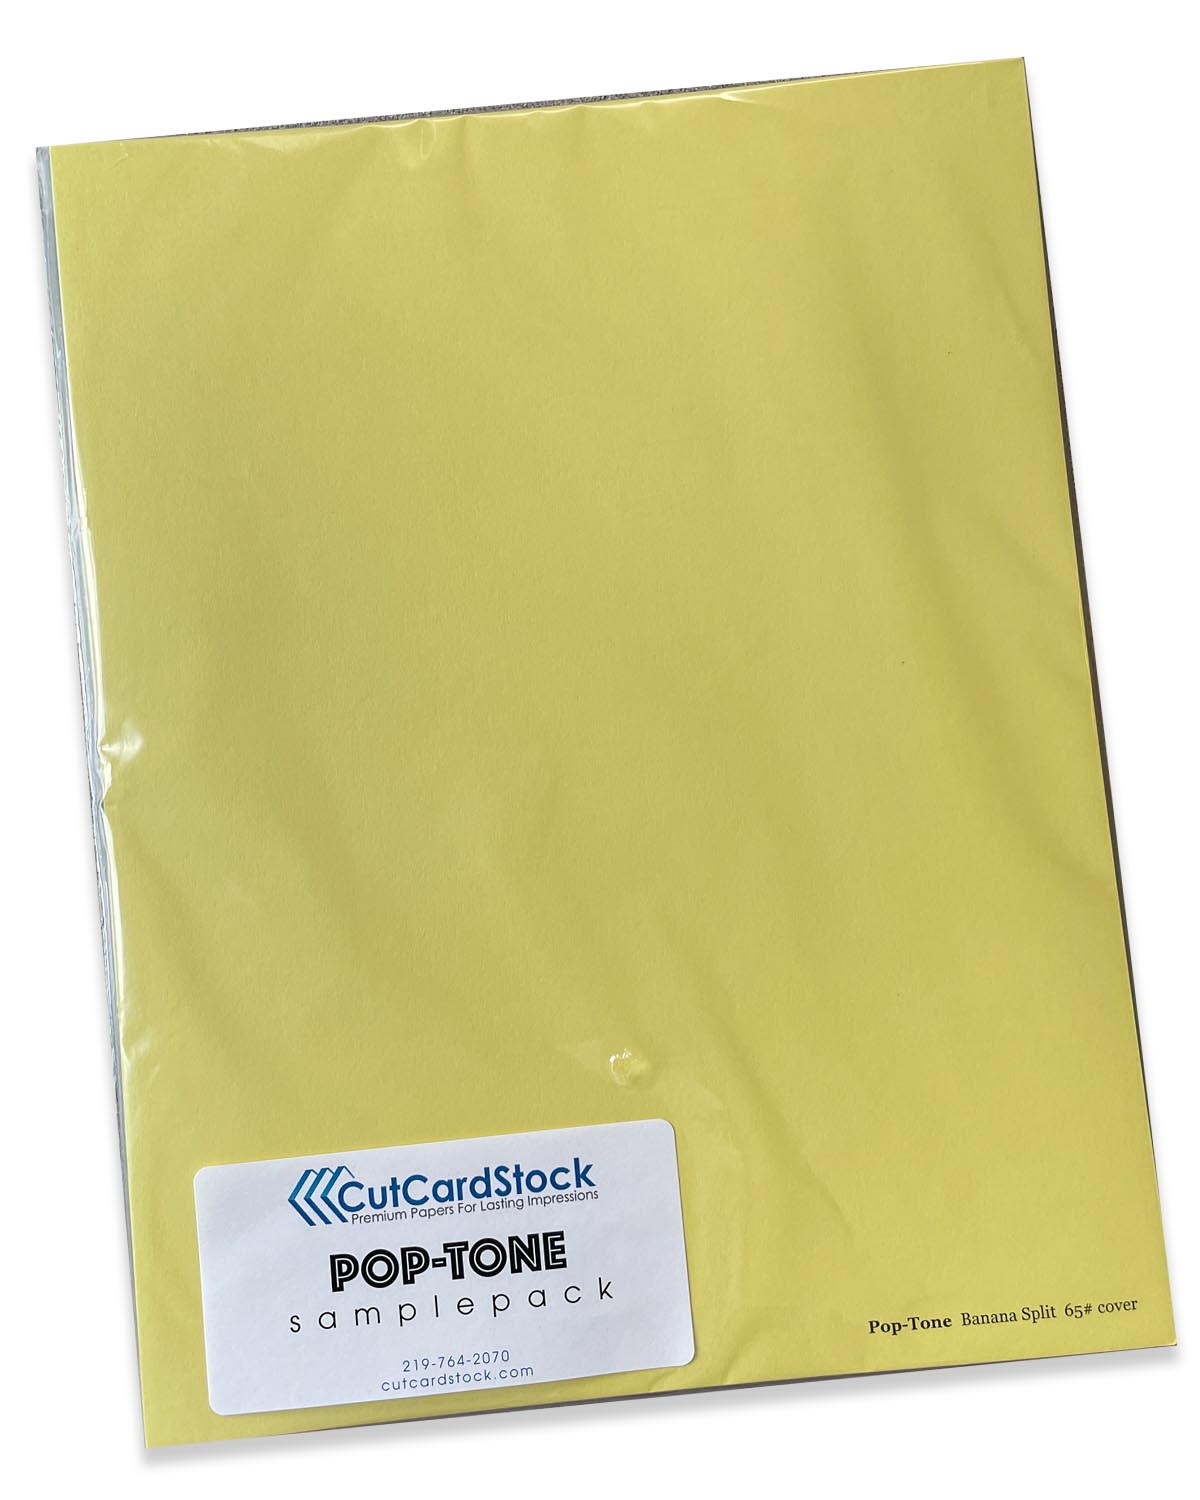  Lemon Drop Yellow Cardstock Paper - 8.5 X 11 Inch 65